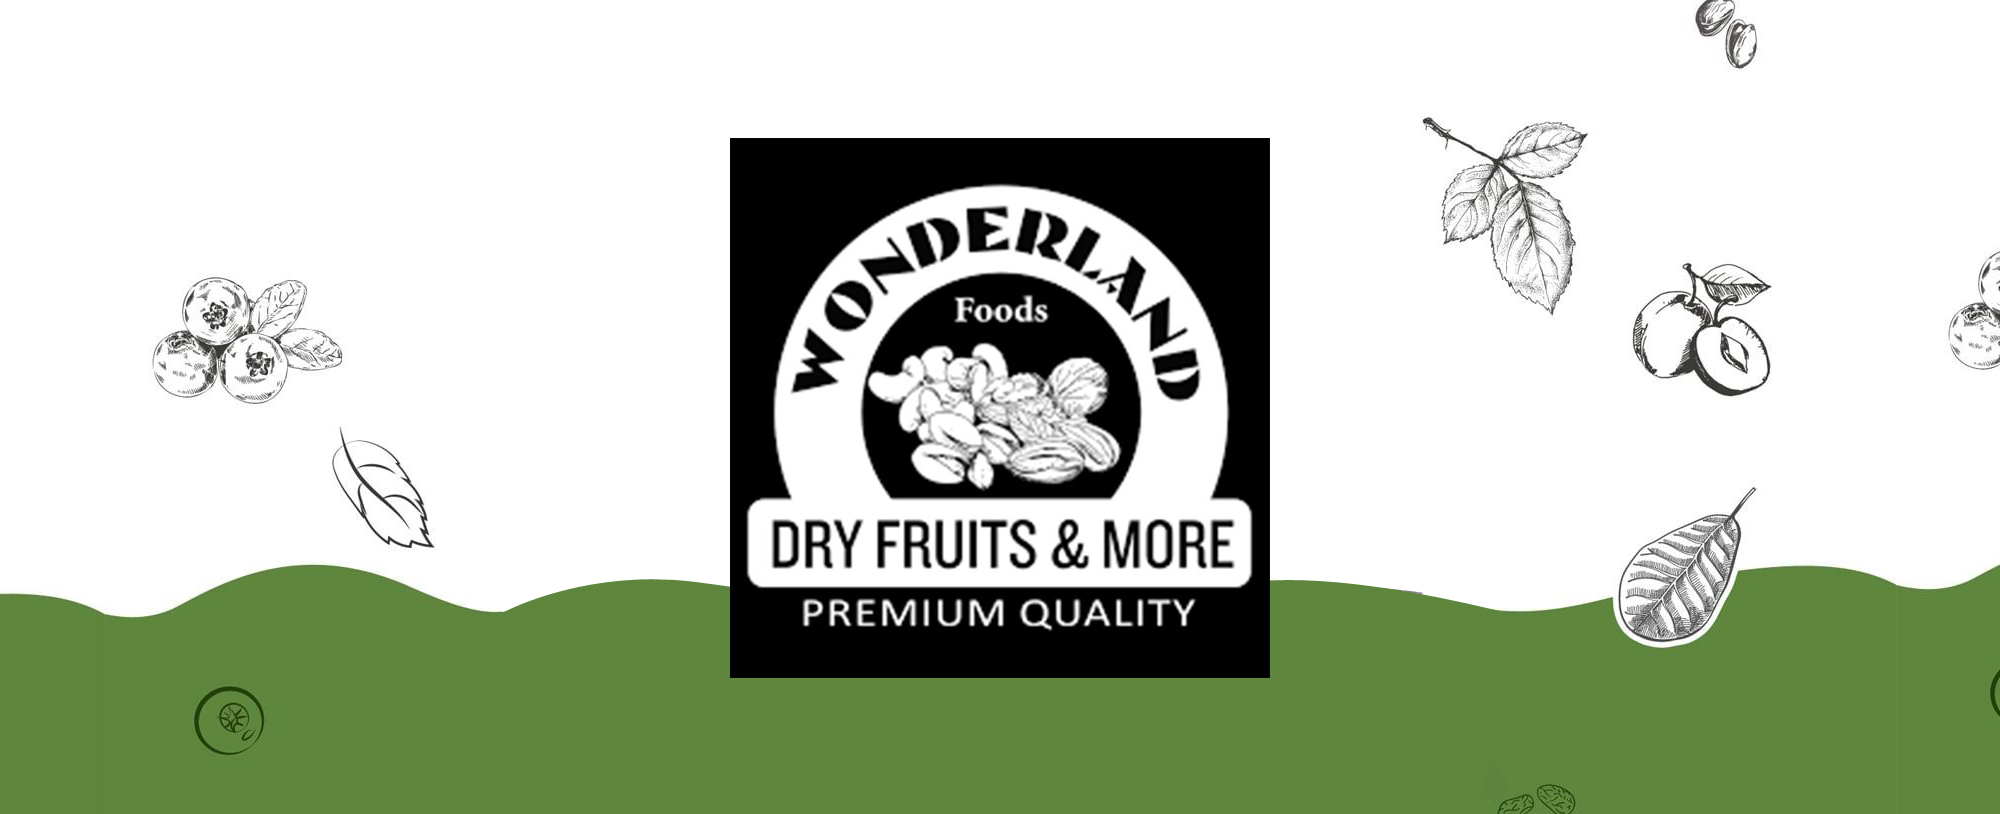 wonderland-logo